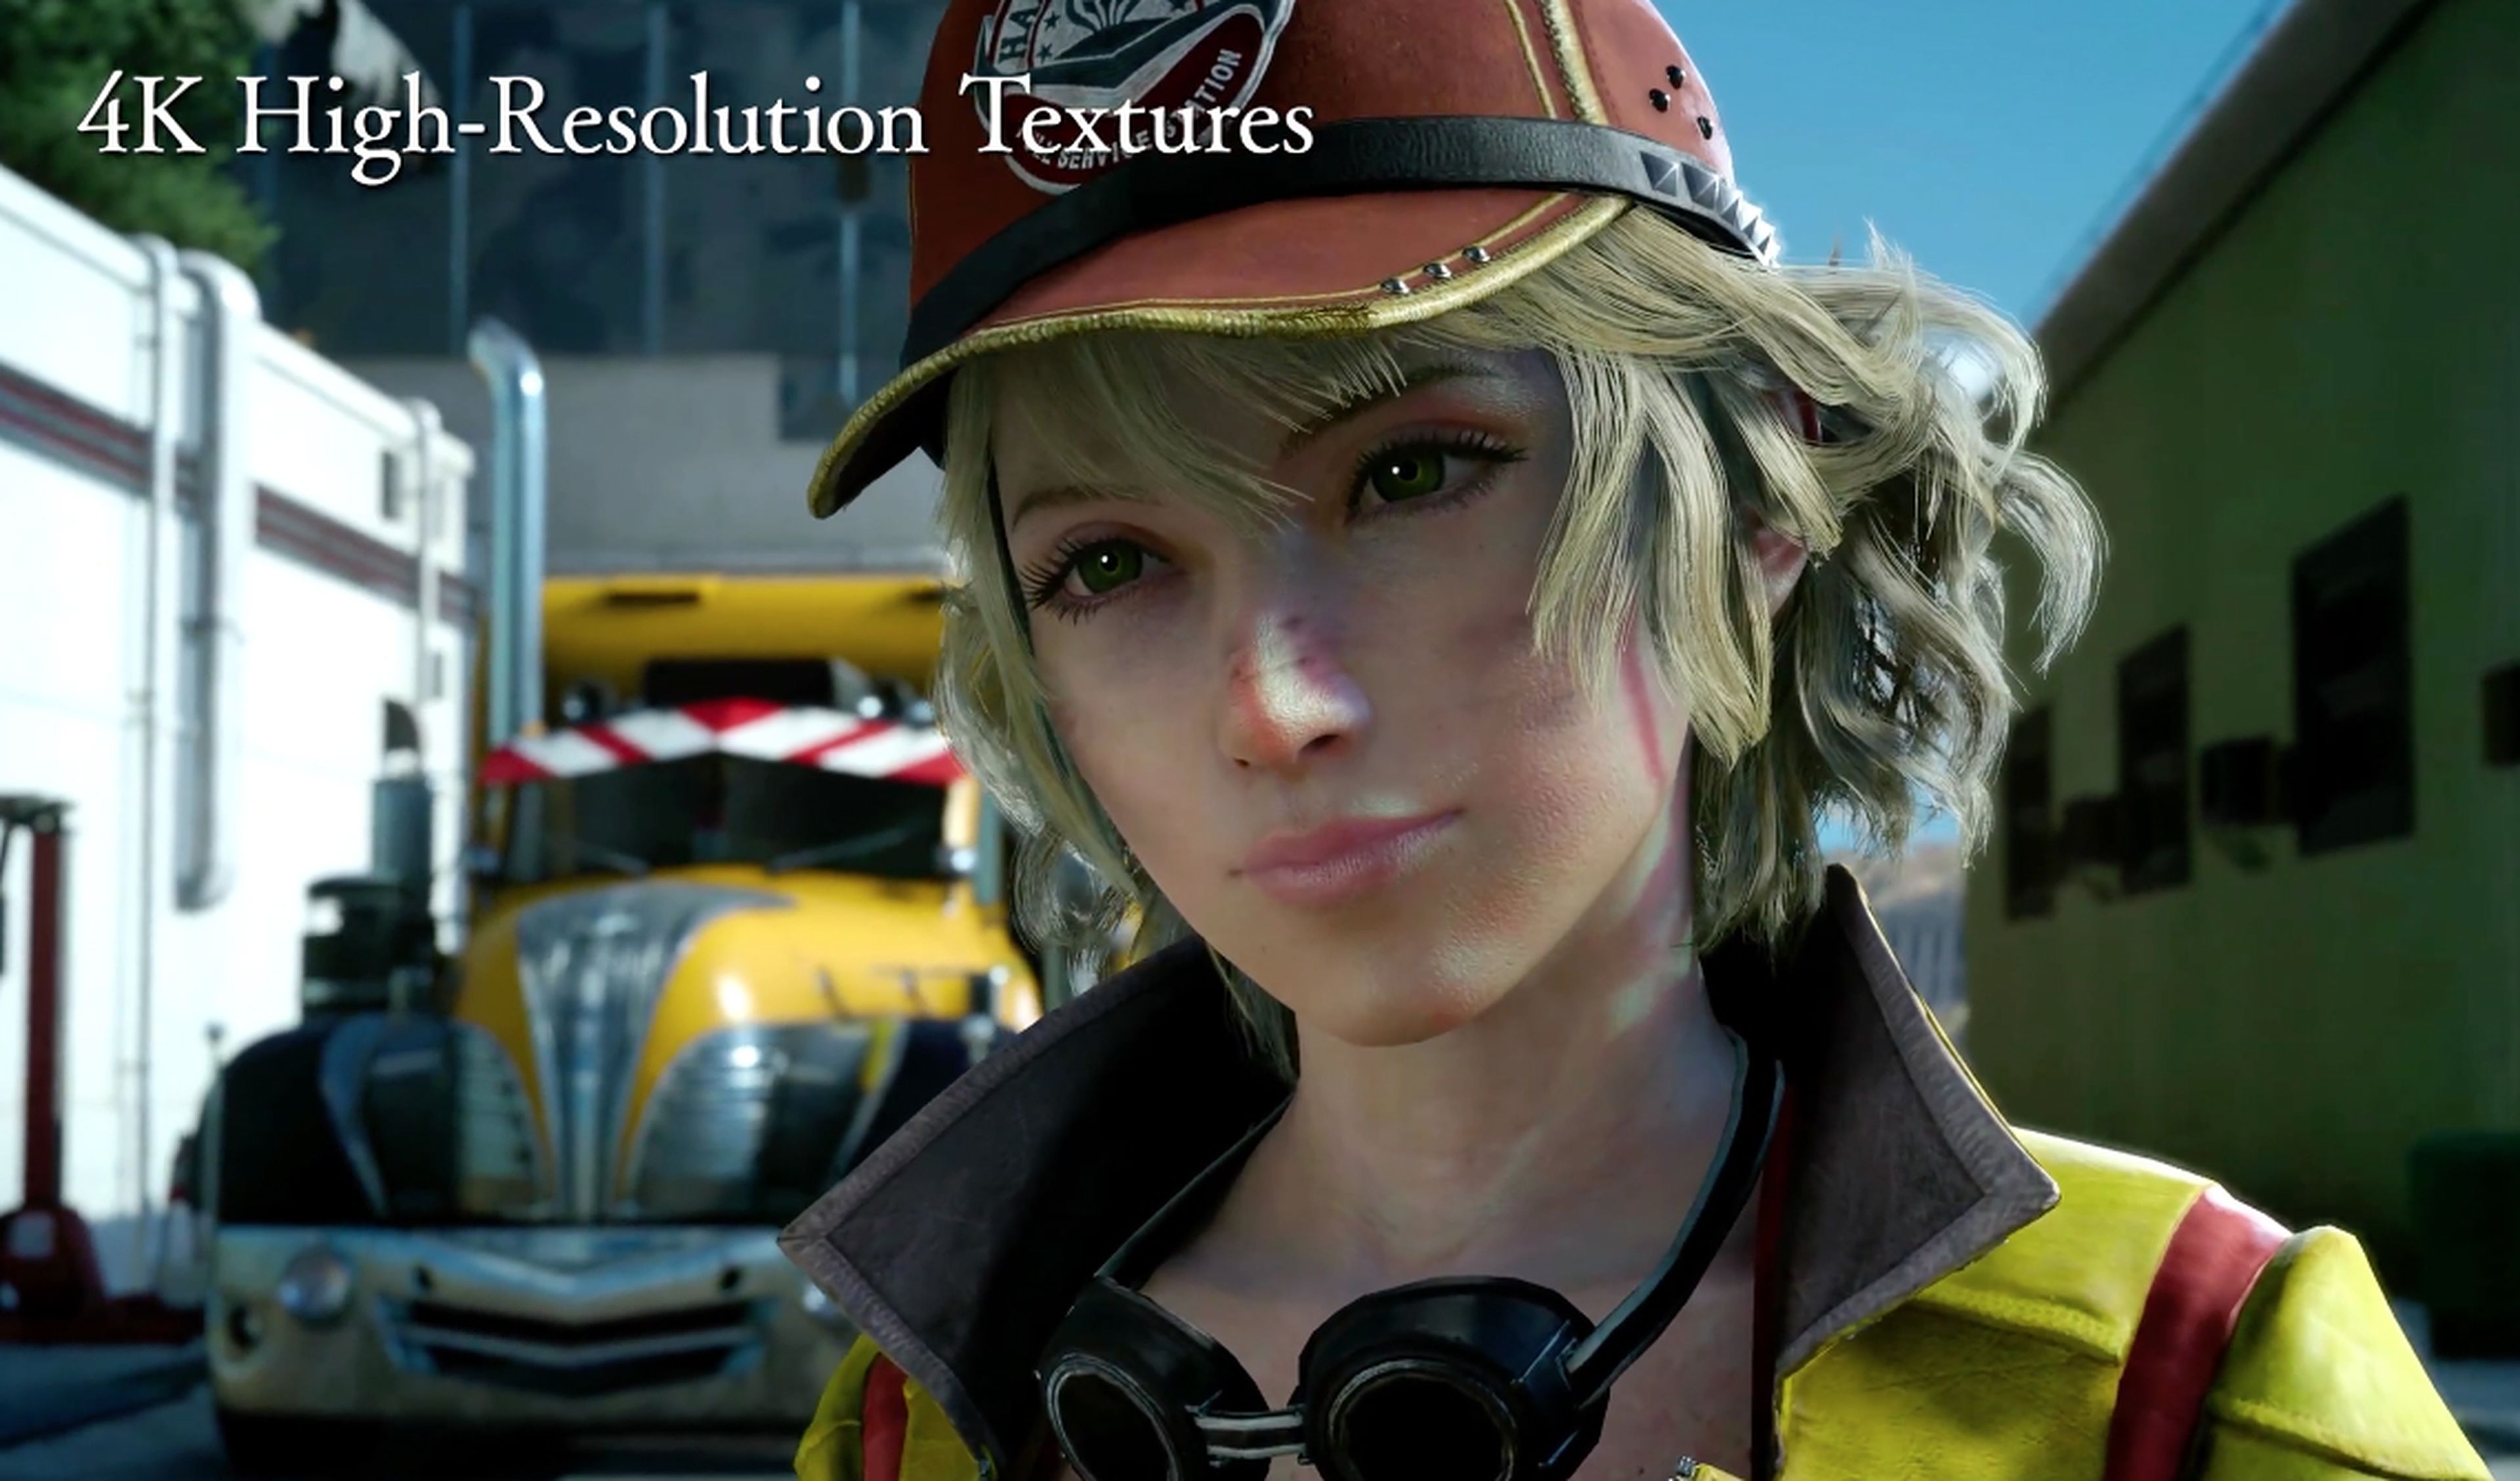 Final Fantasy XV Windows Edition Official Reveal Trailer (in 4K)